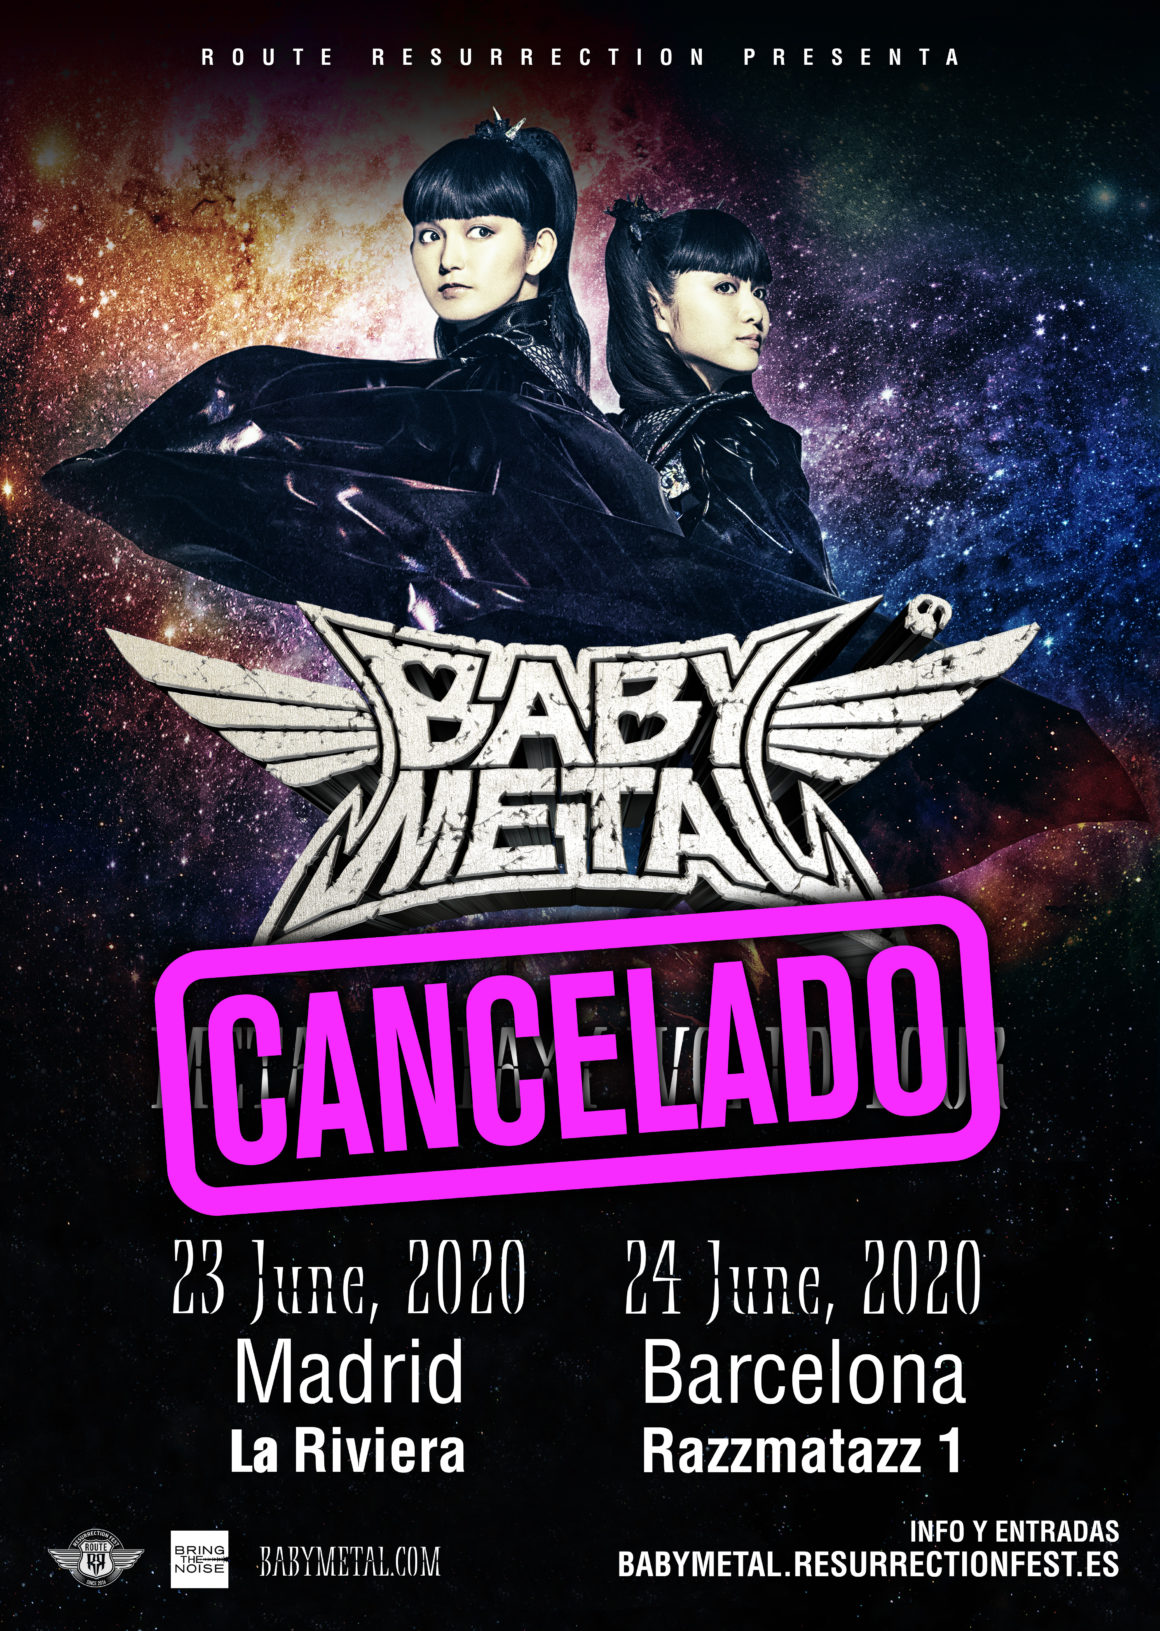 Cancelada la gira de Babymetal